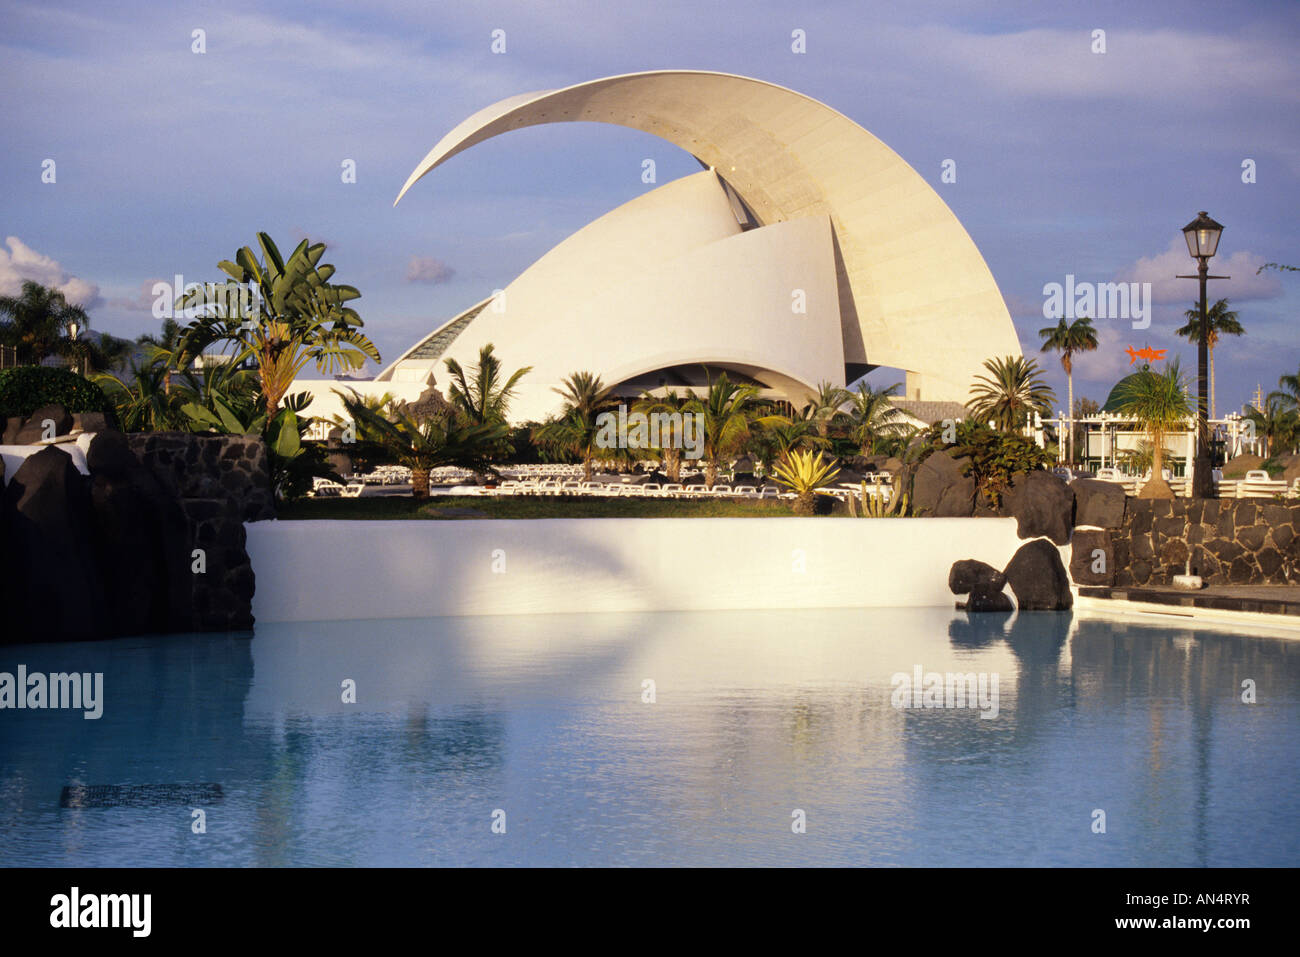 Auditorium by architect Santiago Calatrava in Santa Cruz de Tenerife TENERIFE ISLAND Canary Islands SPAIN Stock Photo